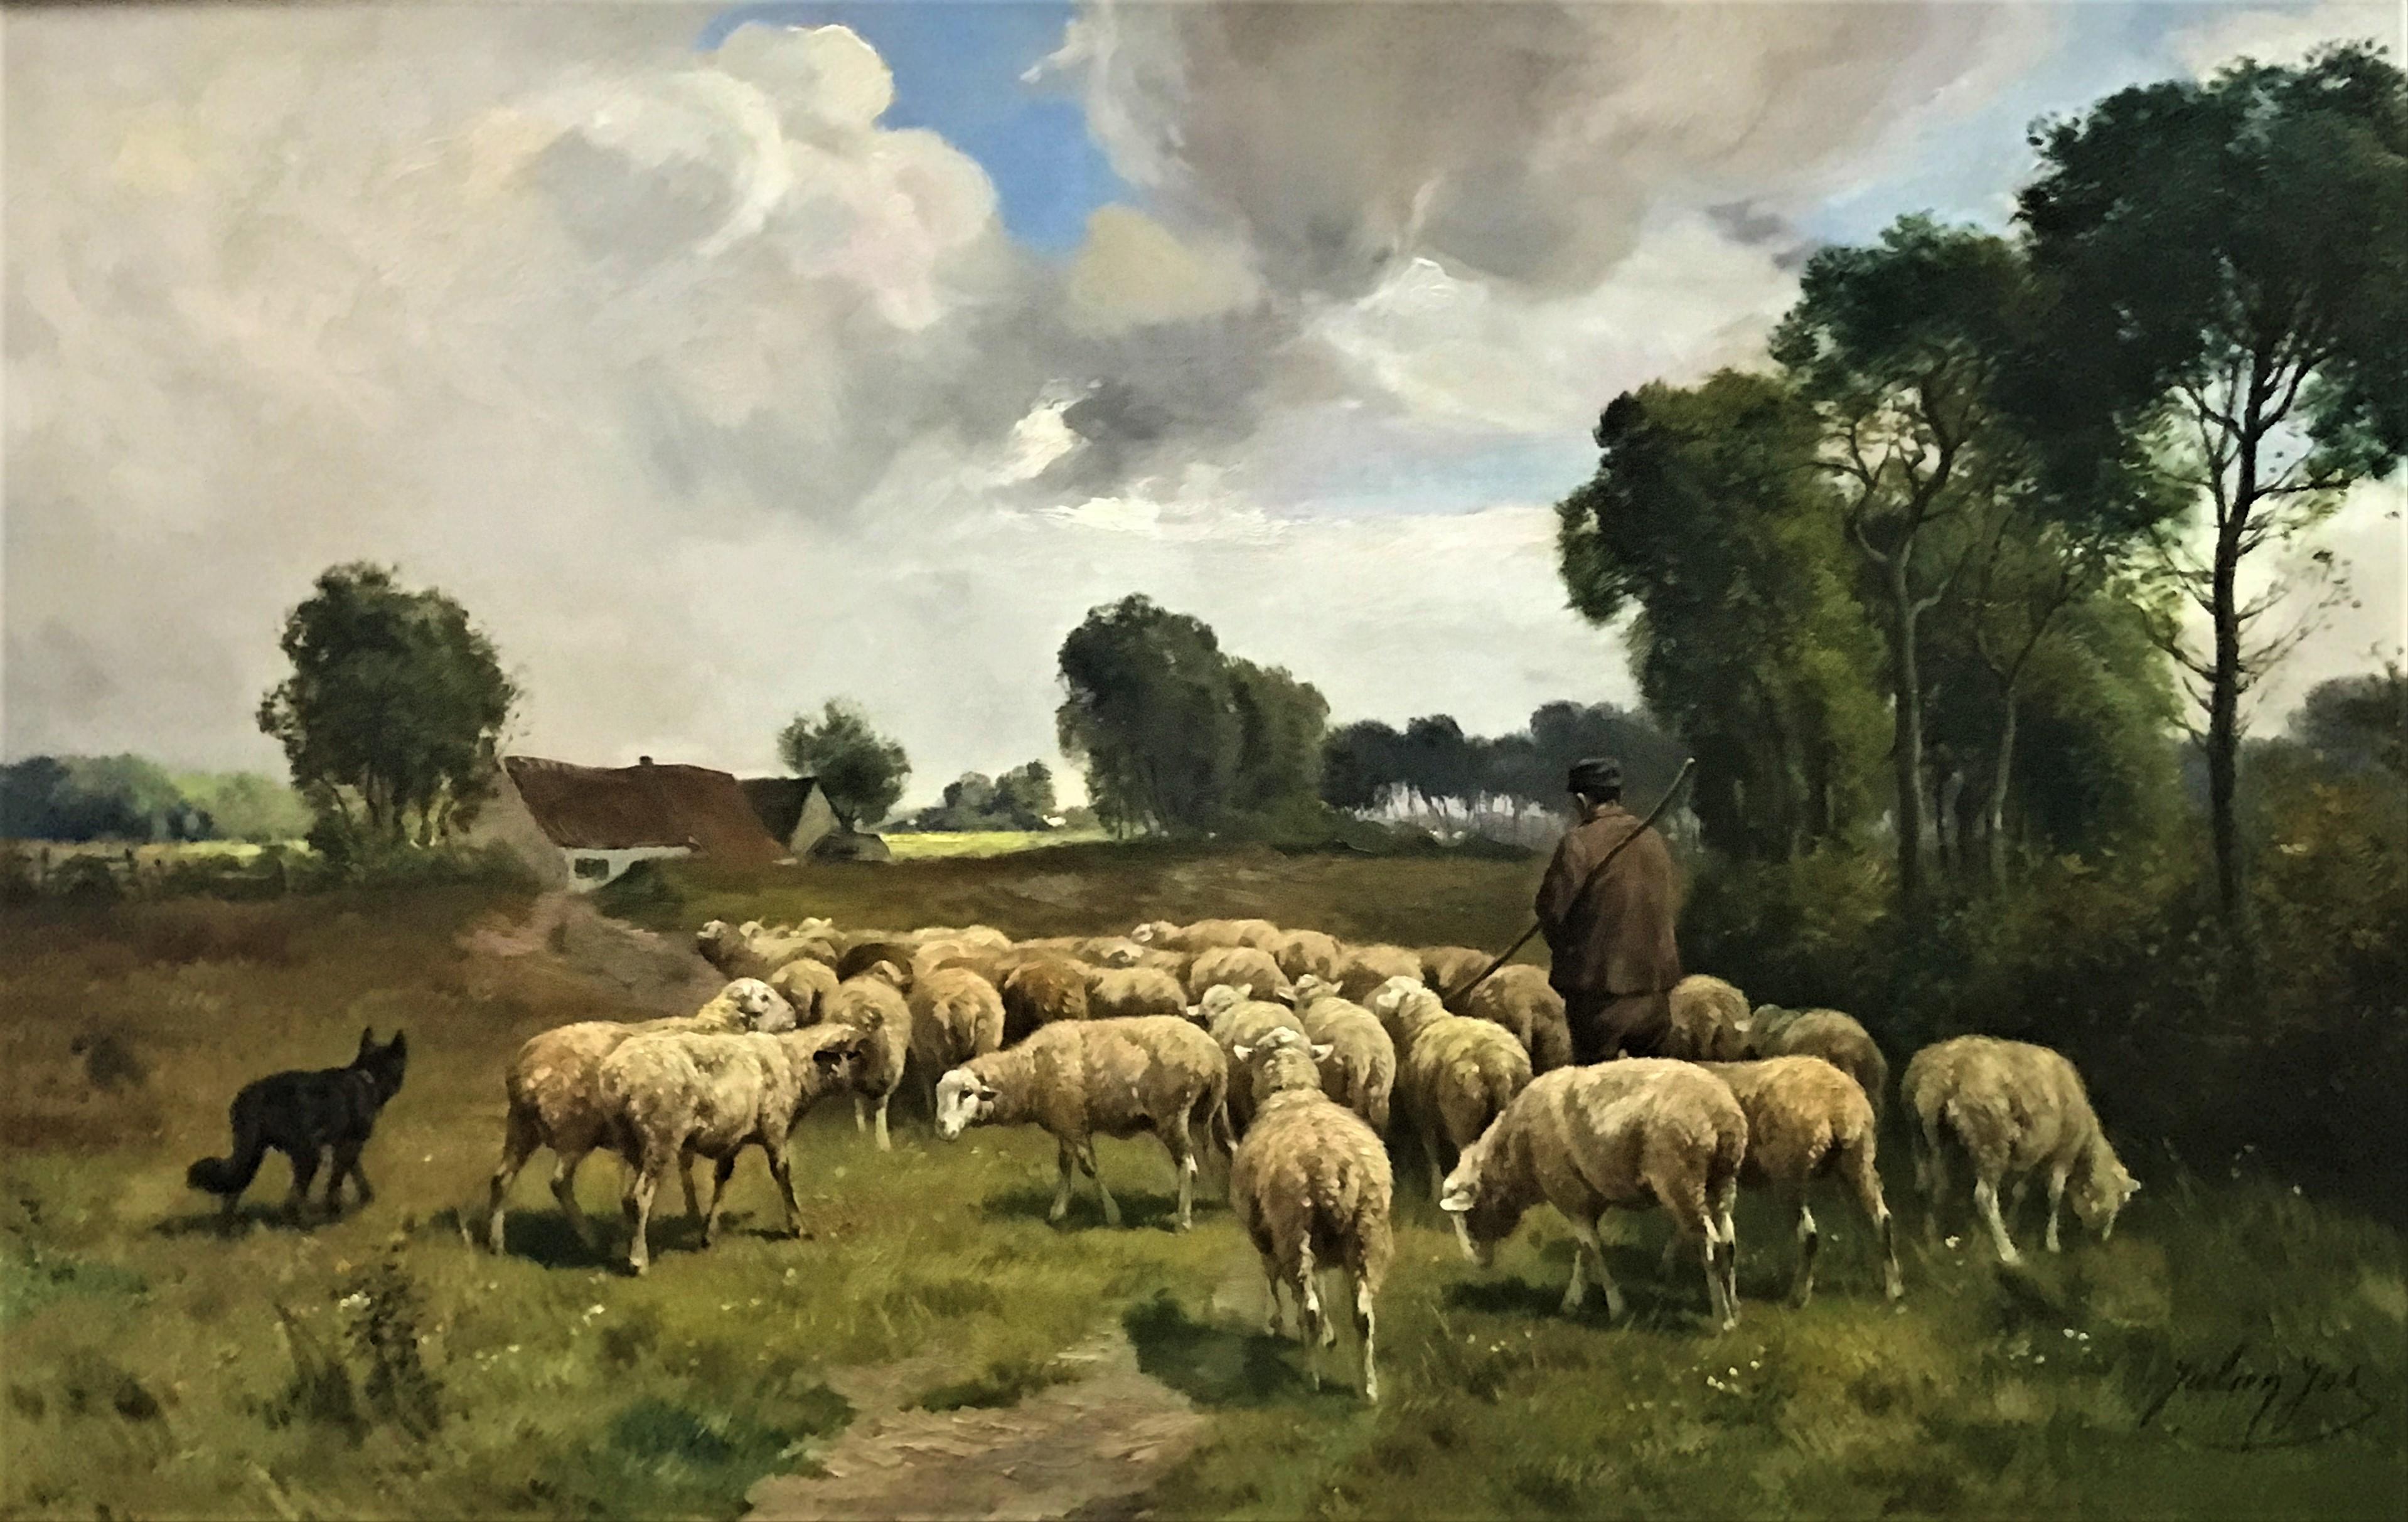 Julien Jos Animal Painting - Shepherd and his Flock, original 19thC oil on canvas, Belgian realist genre